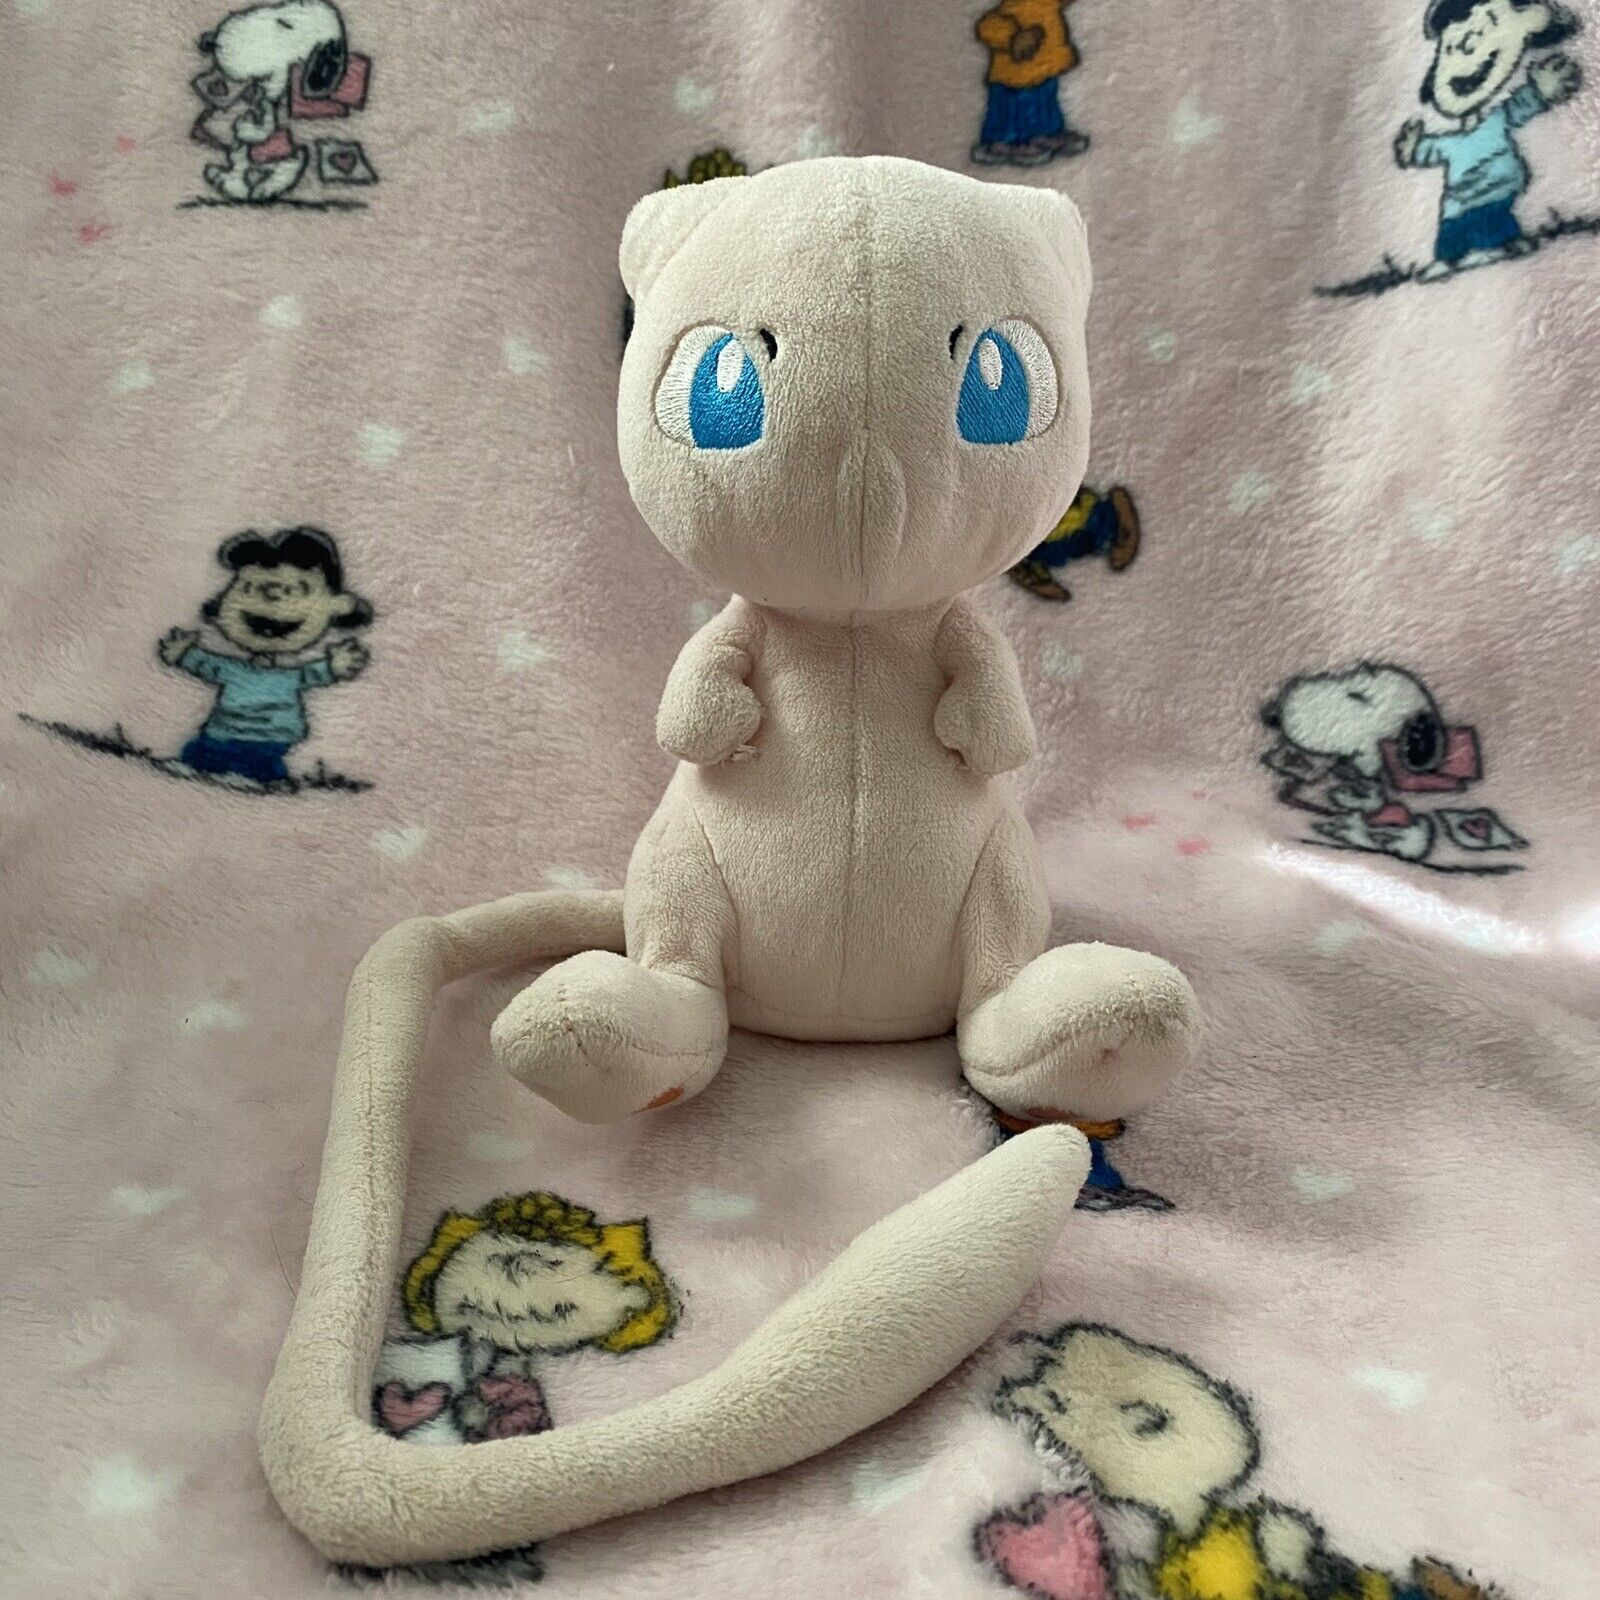 Pokemon San-ei Pocket Monsters Mew Plush Stuffed Animal Doll Japan Pokedoll